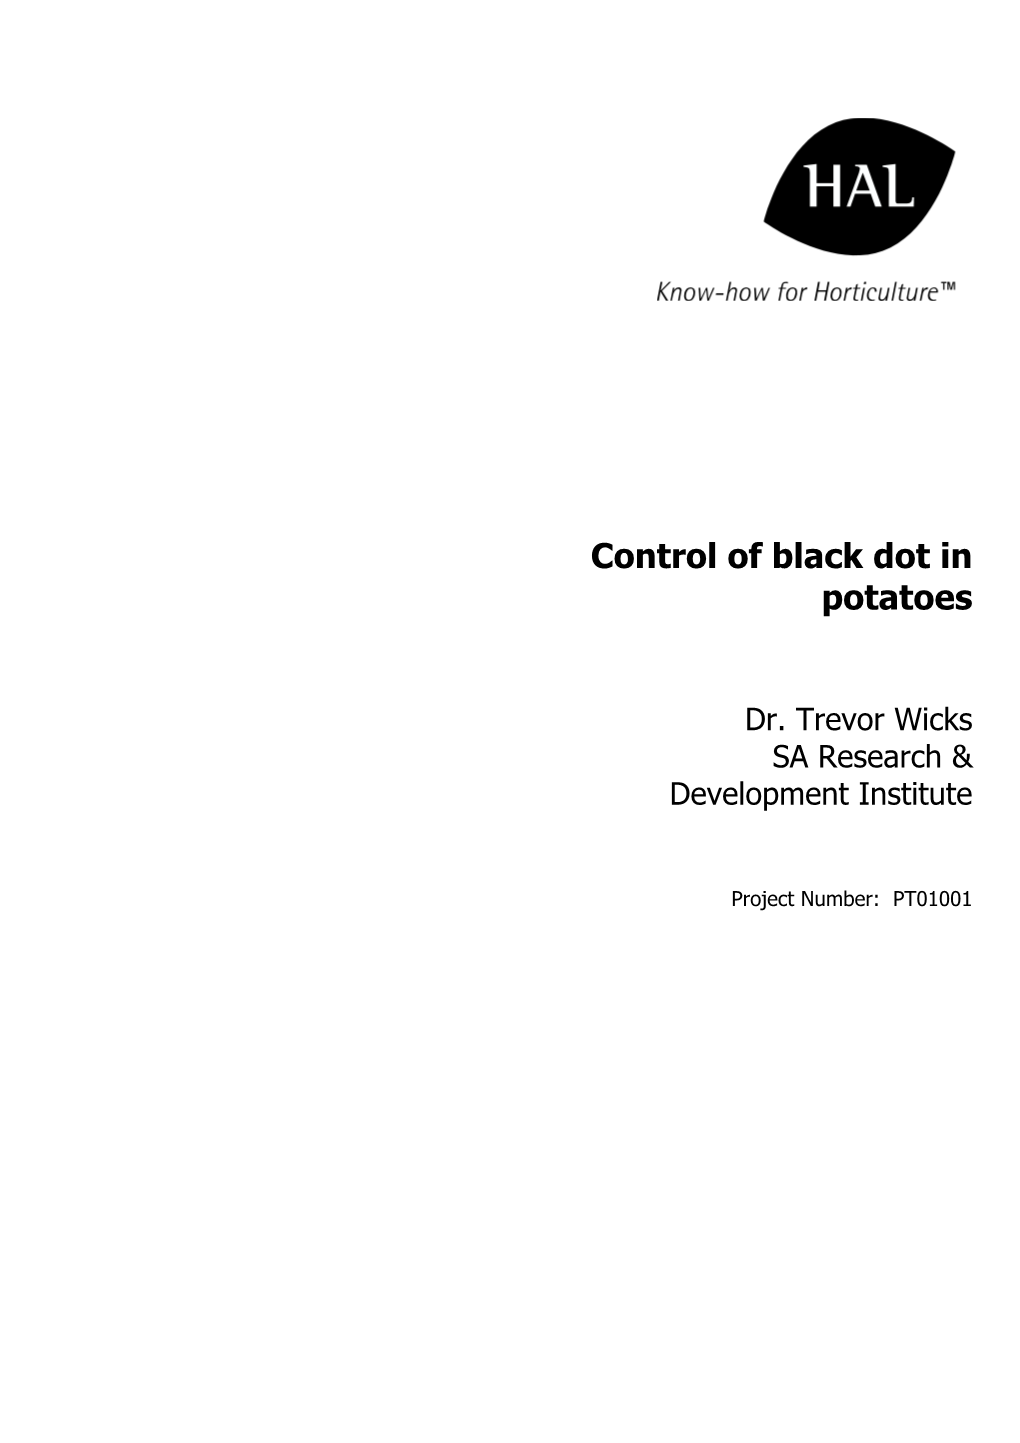 Control of Black Dot in Potatoes